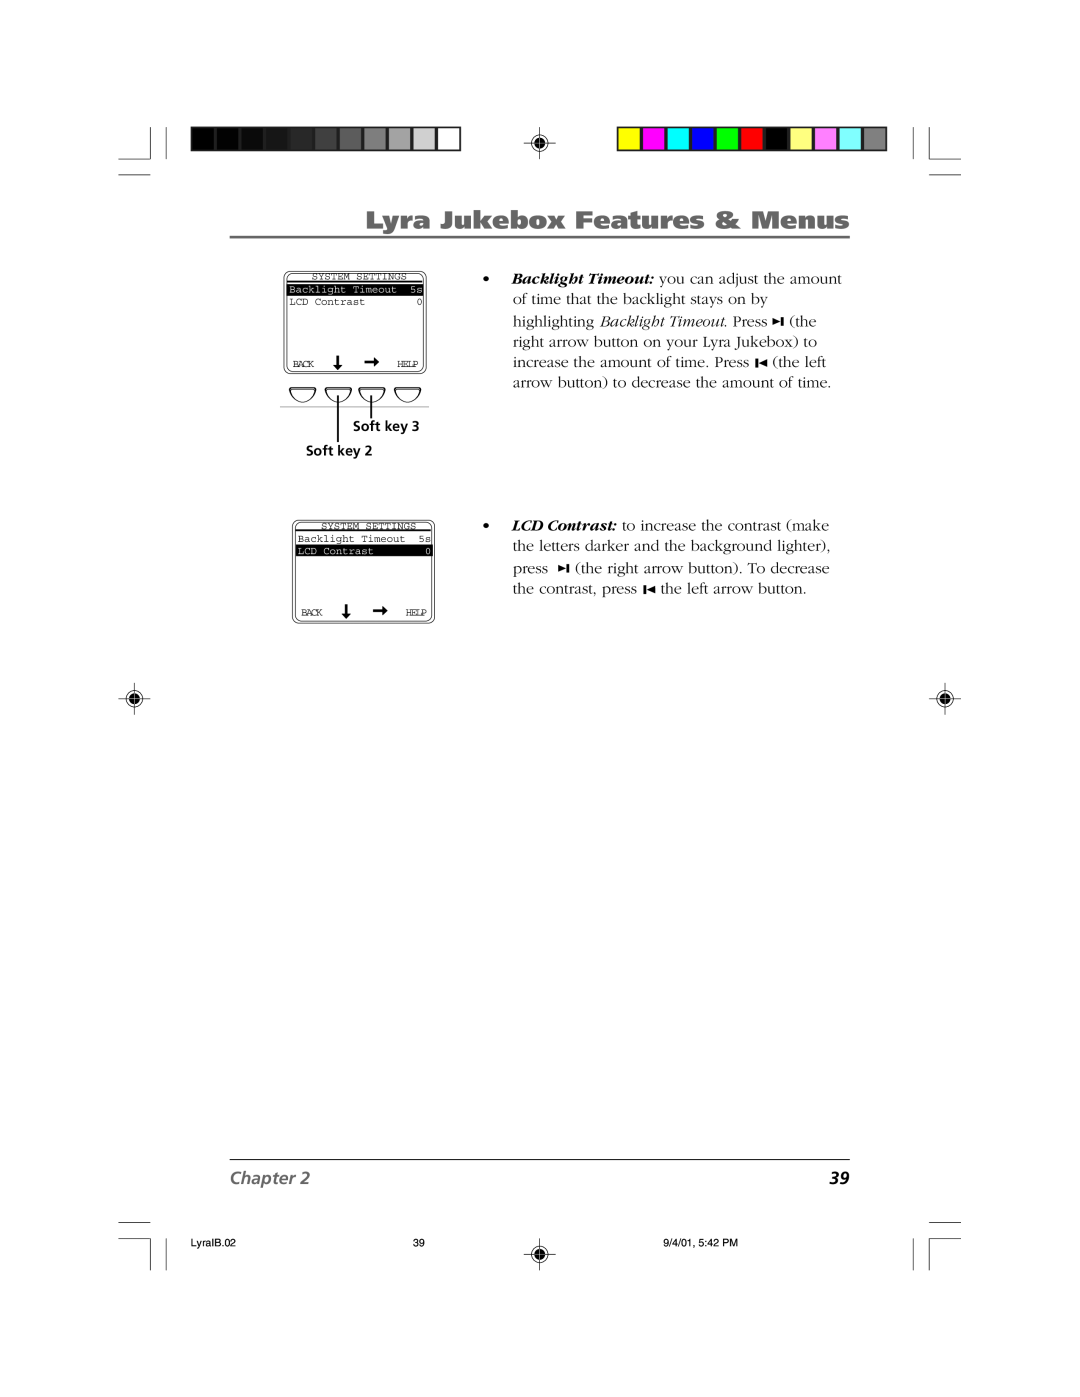 RCA RD2800 manual Lyra Jukebox Features & Menus, Chapter, LyraIB.02, 9/4/01, 5 42 PM 